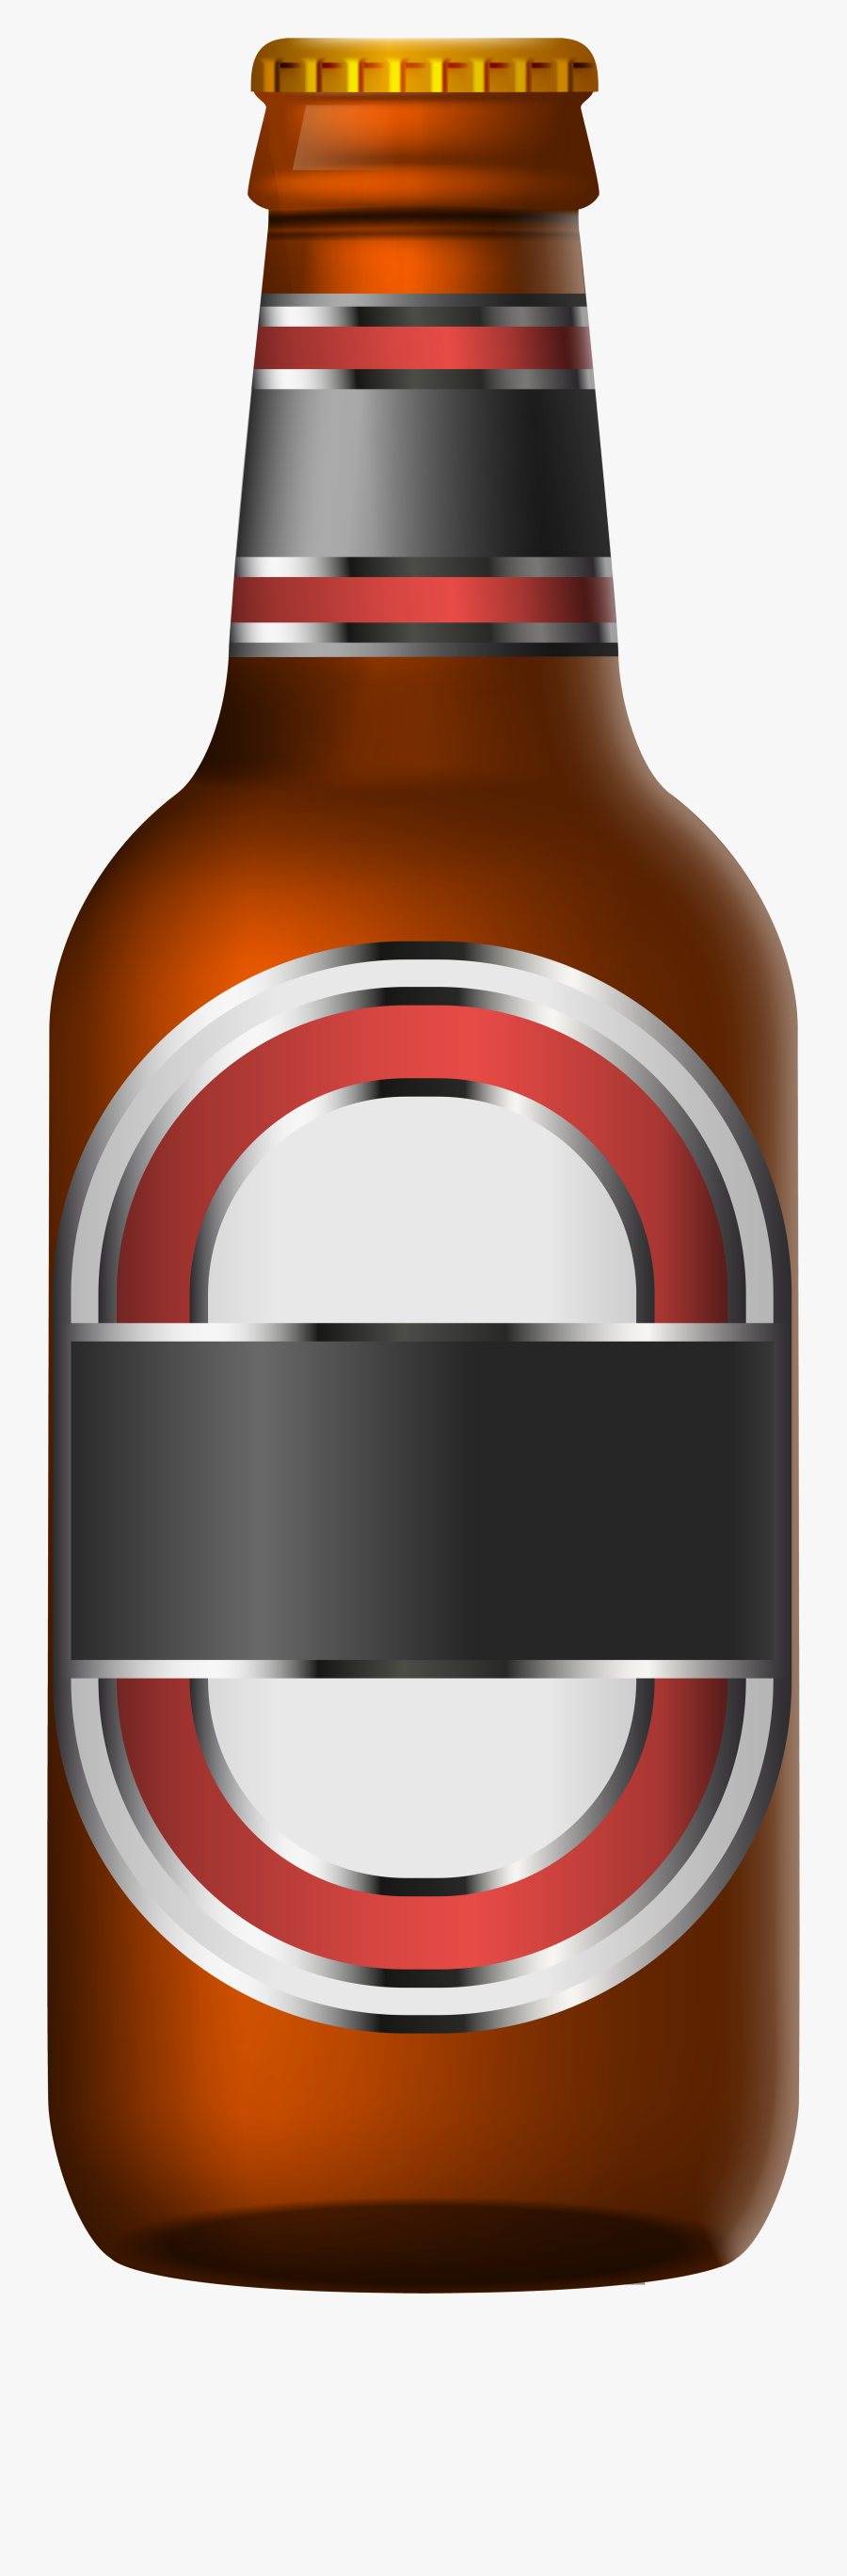 Bottle Transparent Png Clip - Beer Bottle Clip Art Png, Transparent Clipart